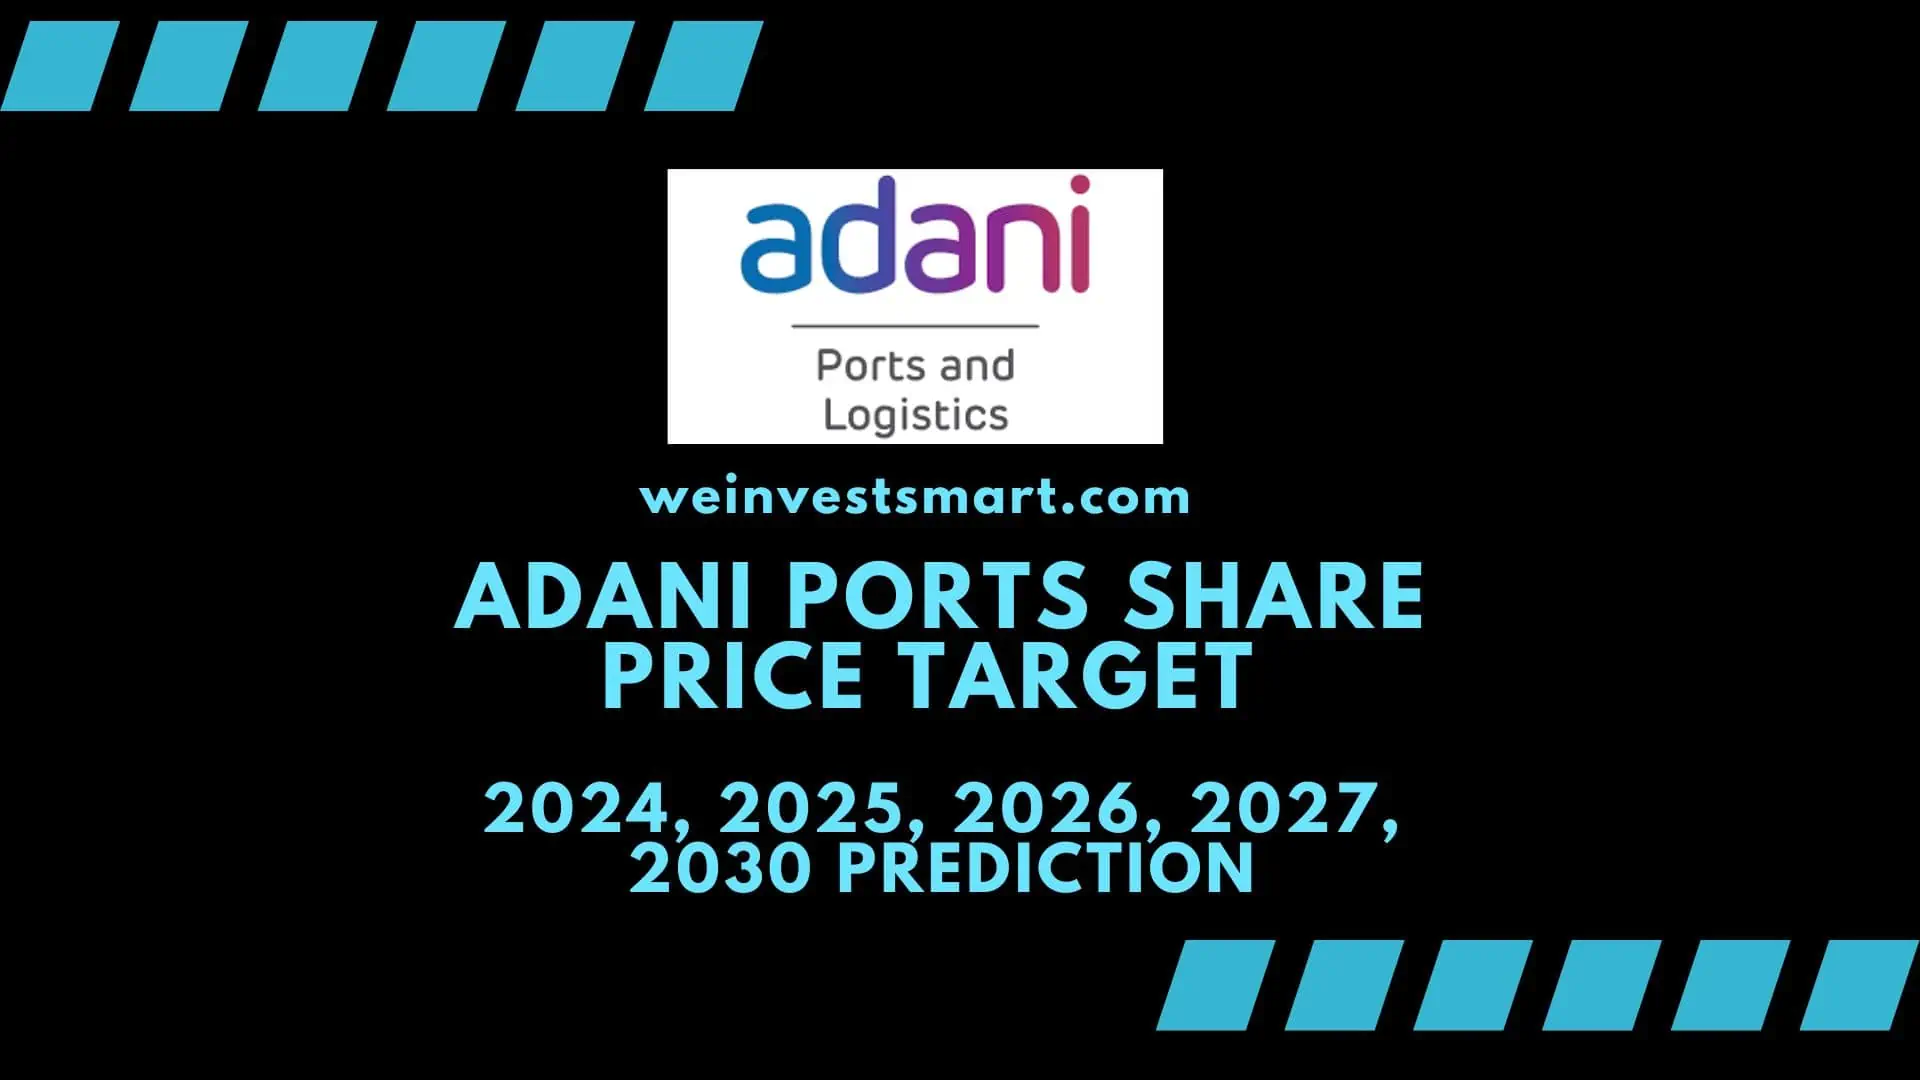 Adani Ports share price target 2024, 2025, 2026, 2027, 2030 prediction